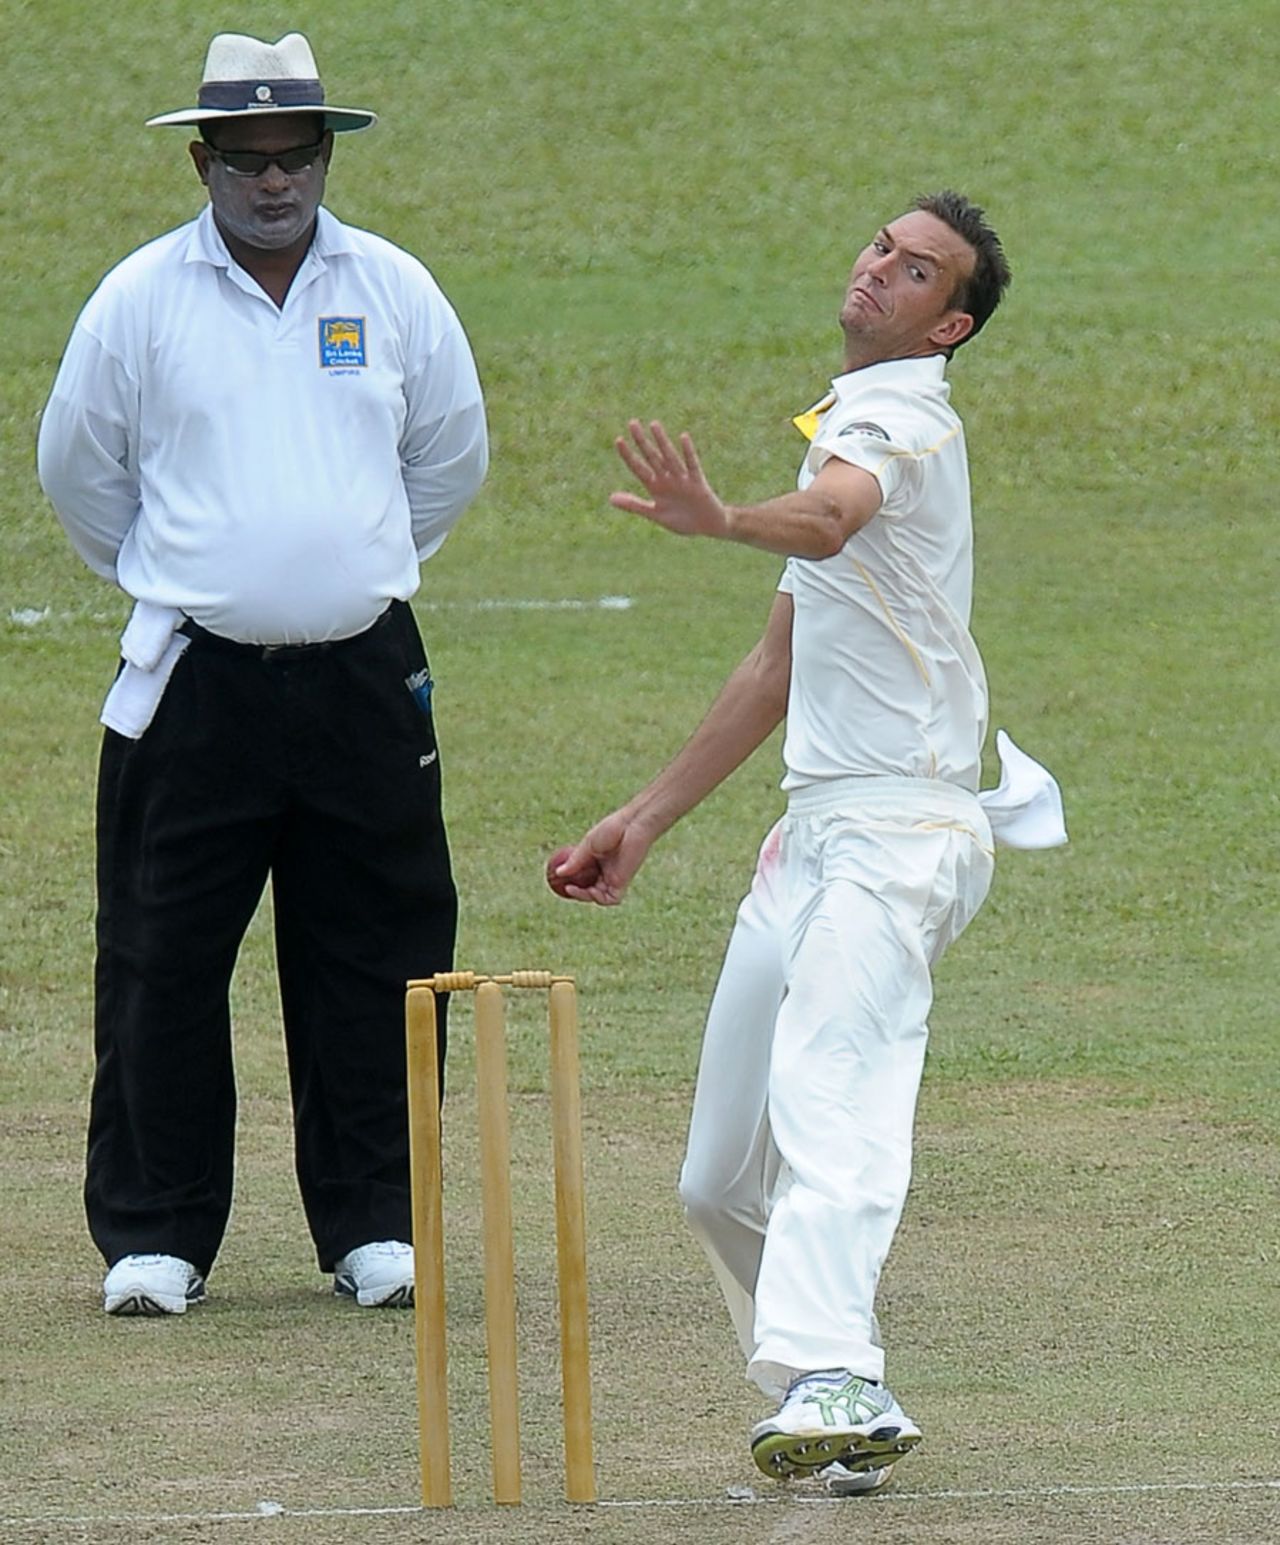 Trent Copeland prepares to deliver the ball, Sri Lanka Board XI v Australians, Colombo, 1st day, August 25, 2011 